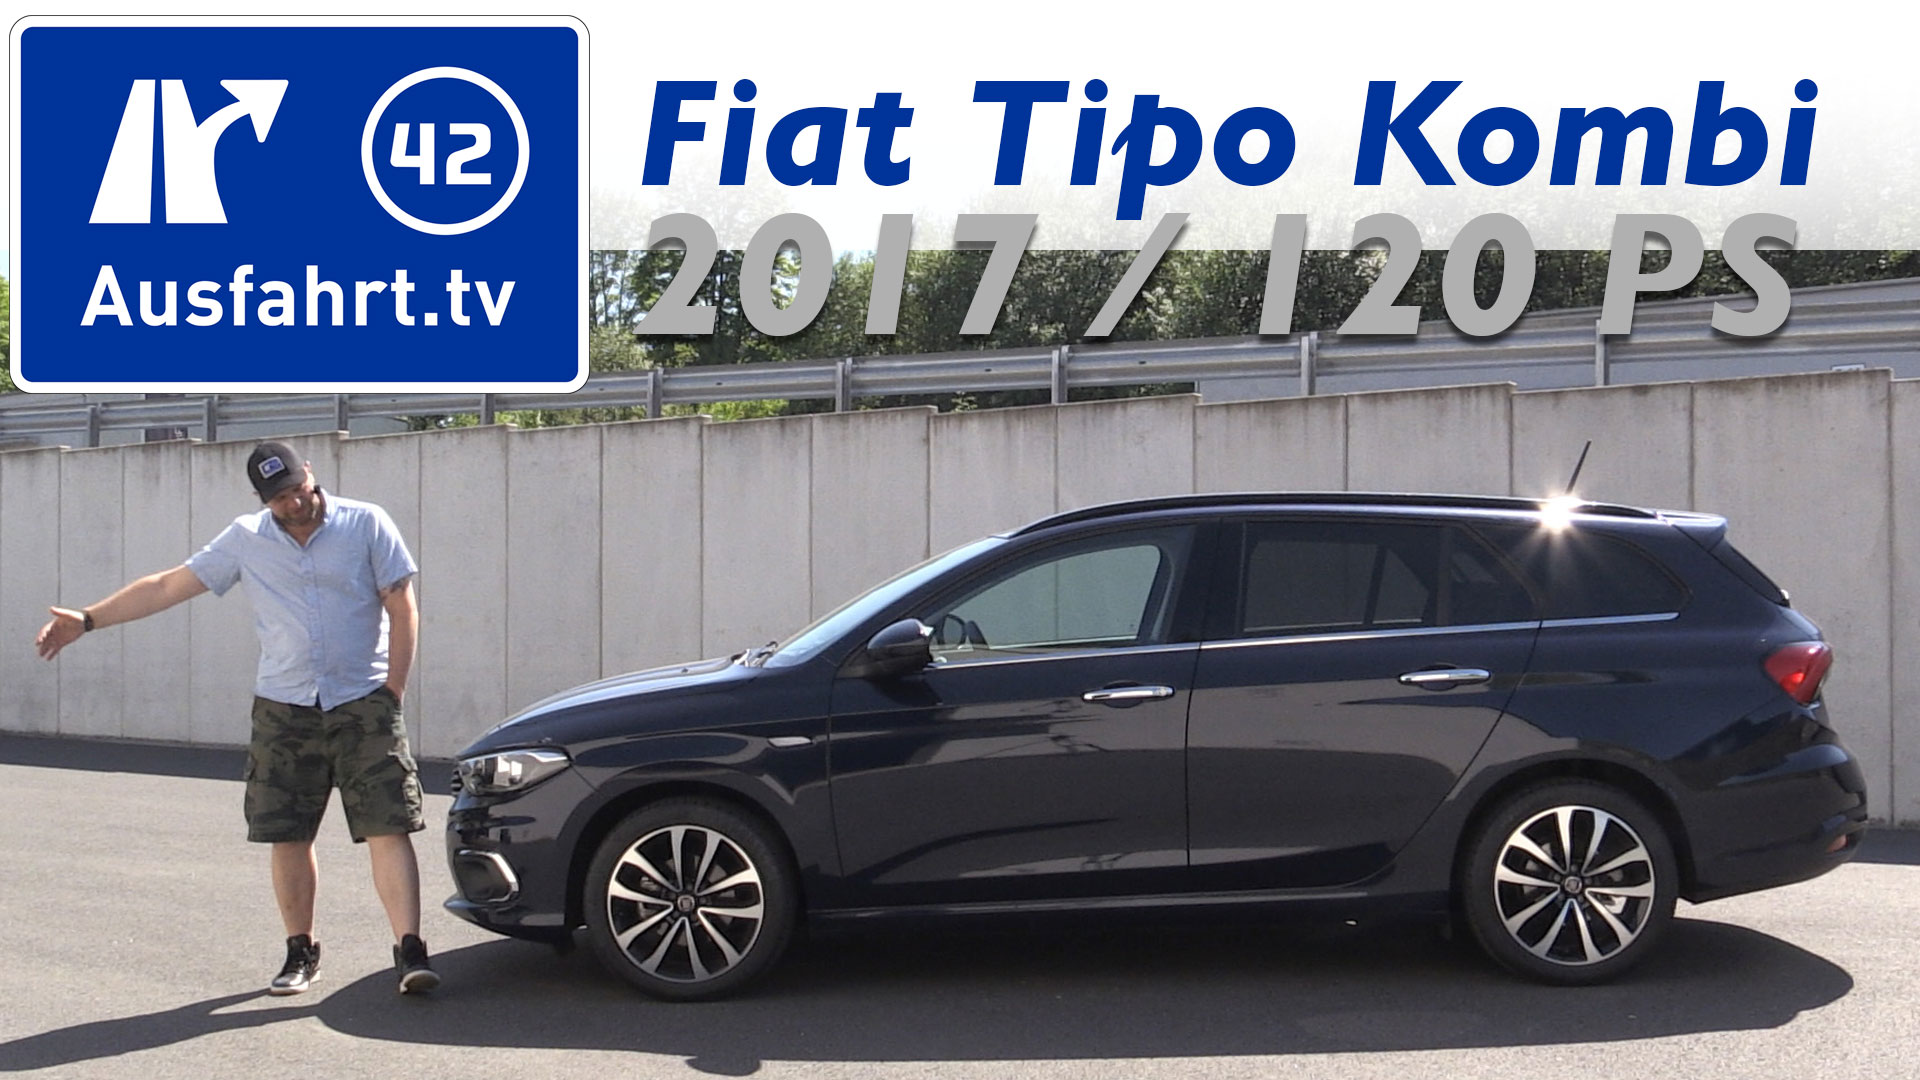 2017 Fiat Tipo Kombi 1.4 T-Jet 120 PS Lounge (Typ 356) –